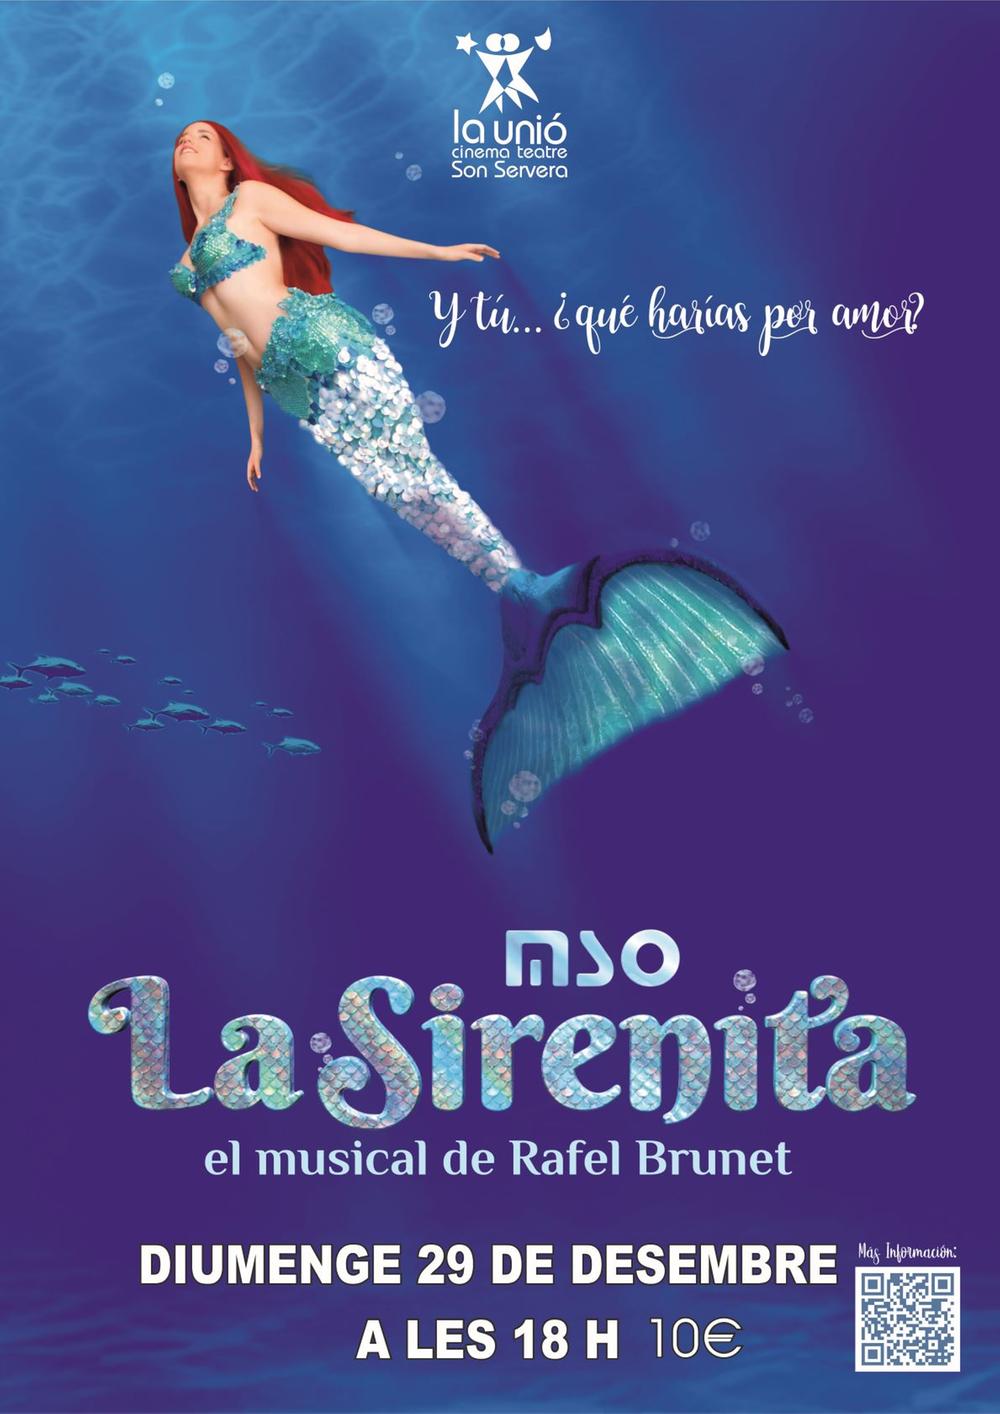 La Sirenita, el gran musical